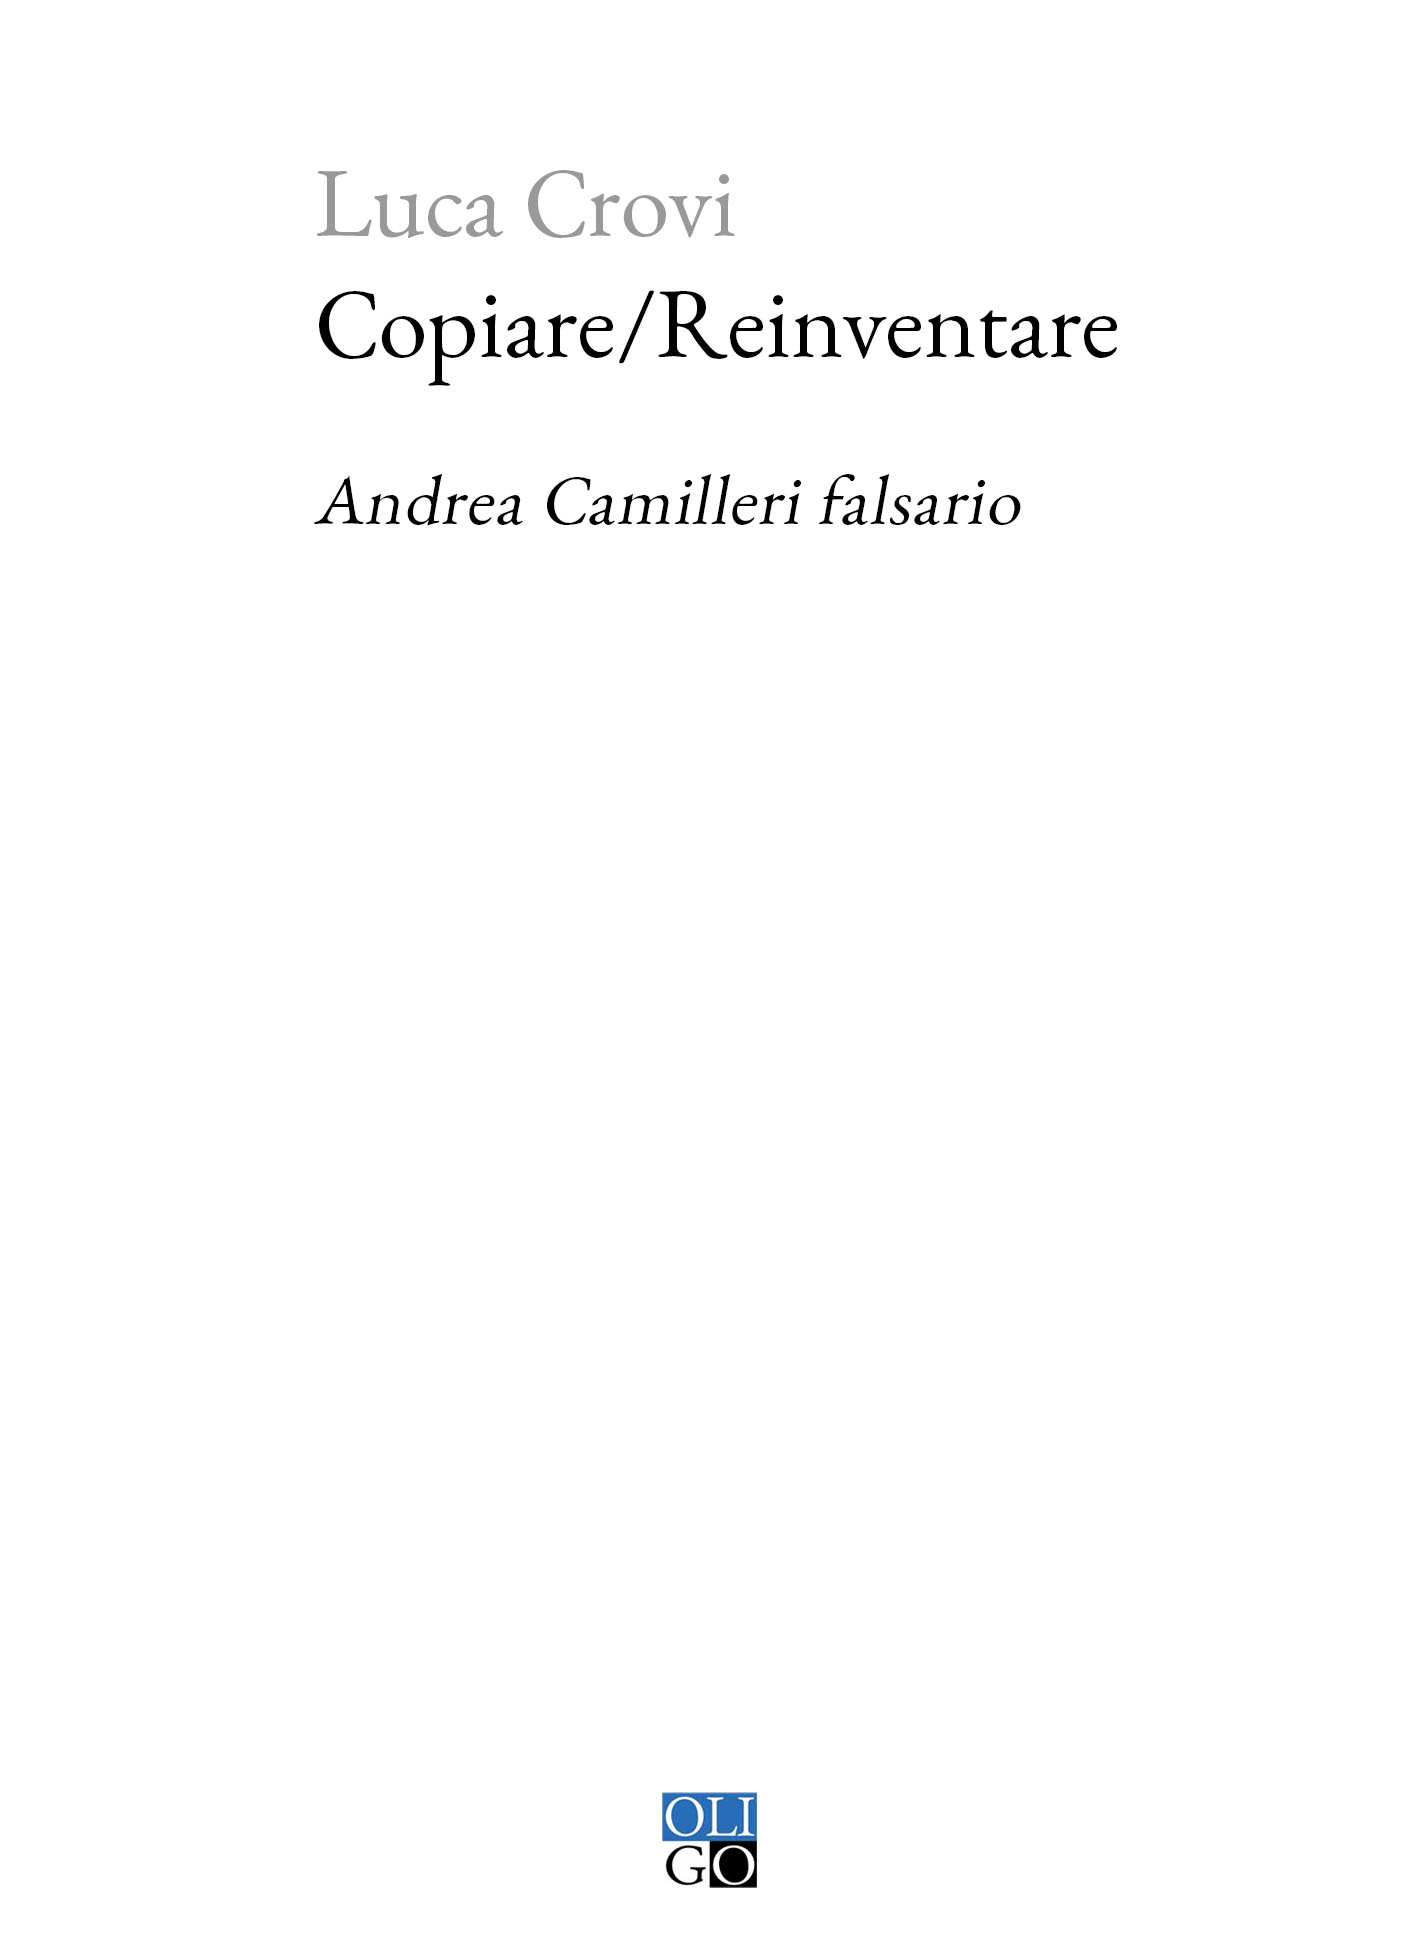 Copiare/Reinventare. Andrea Camilleri falsario - In libreria